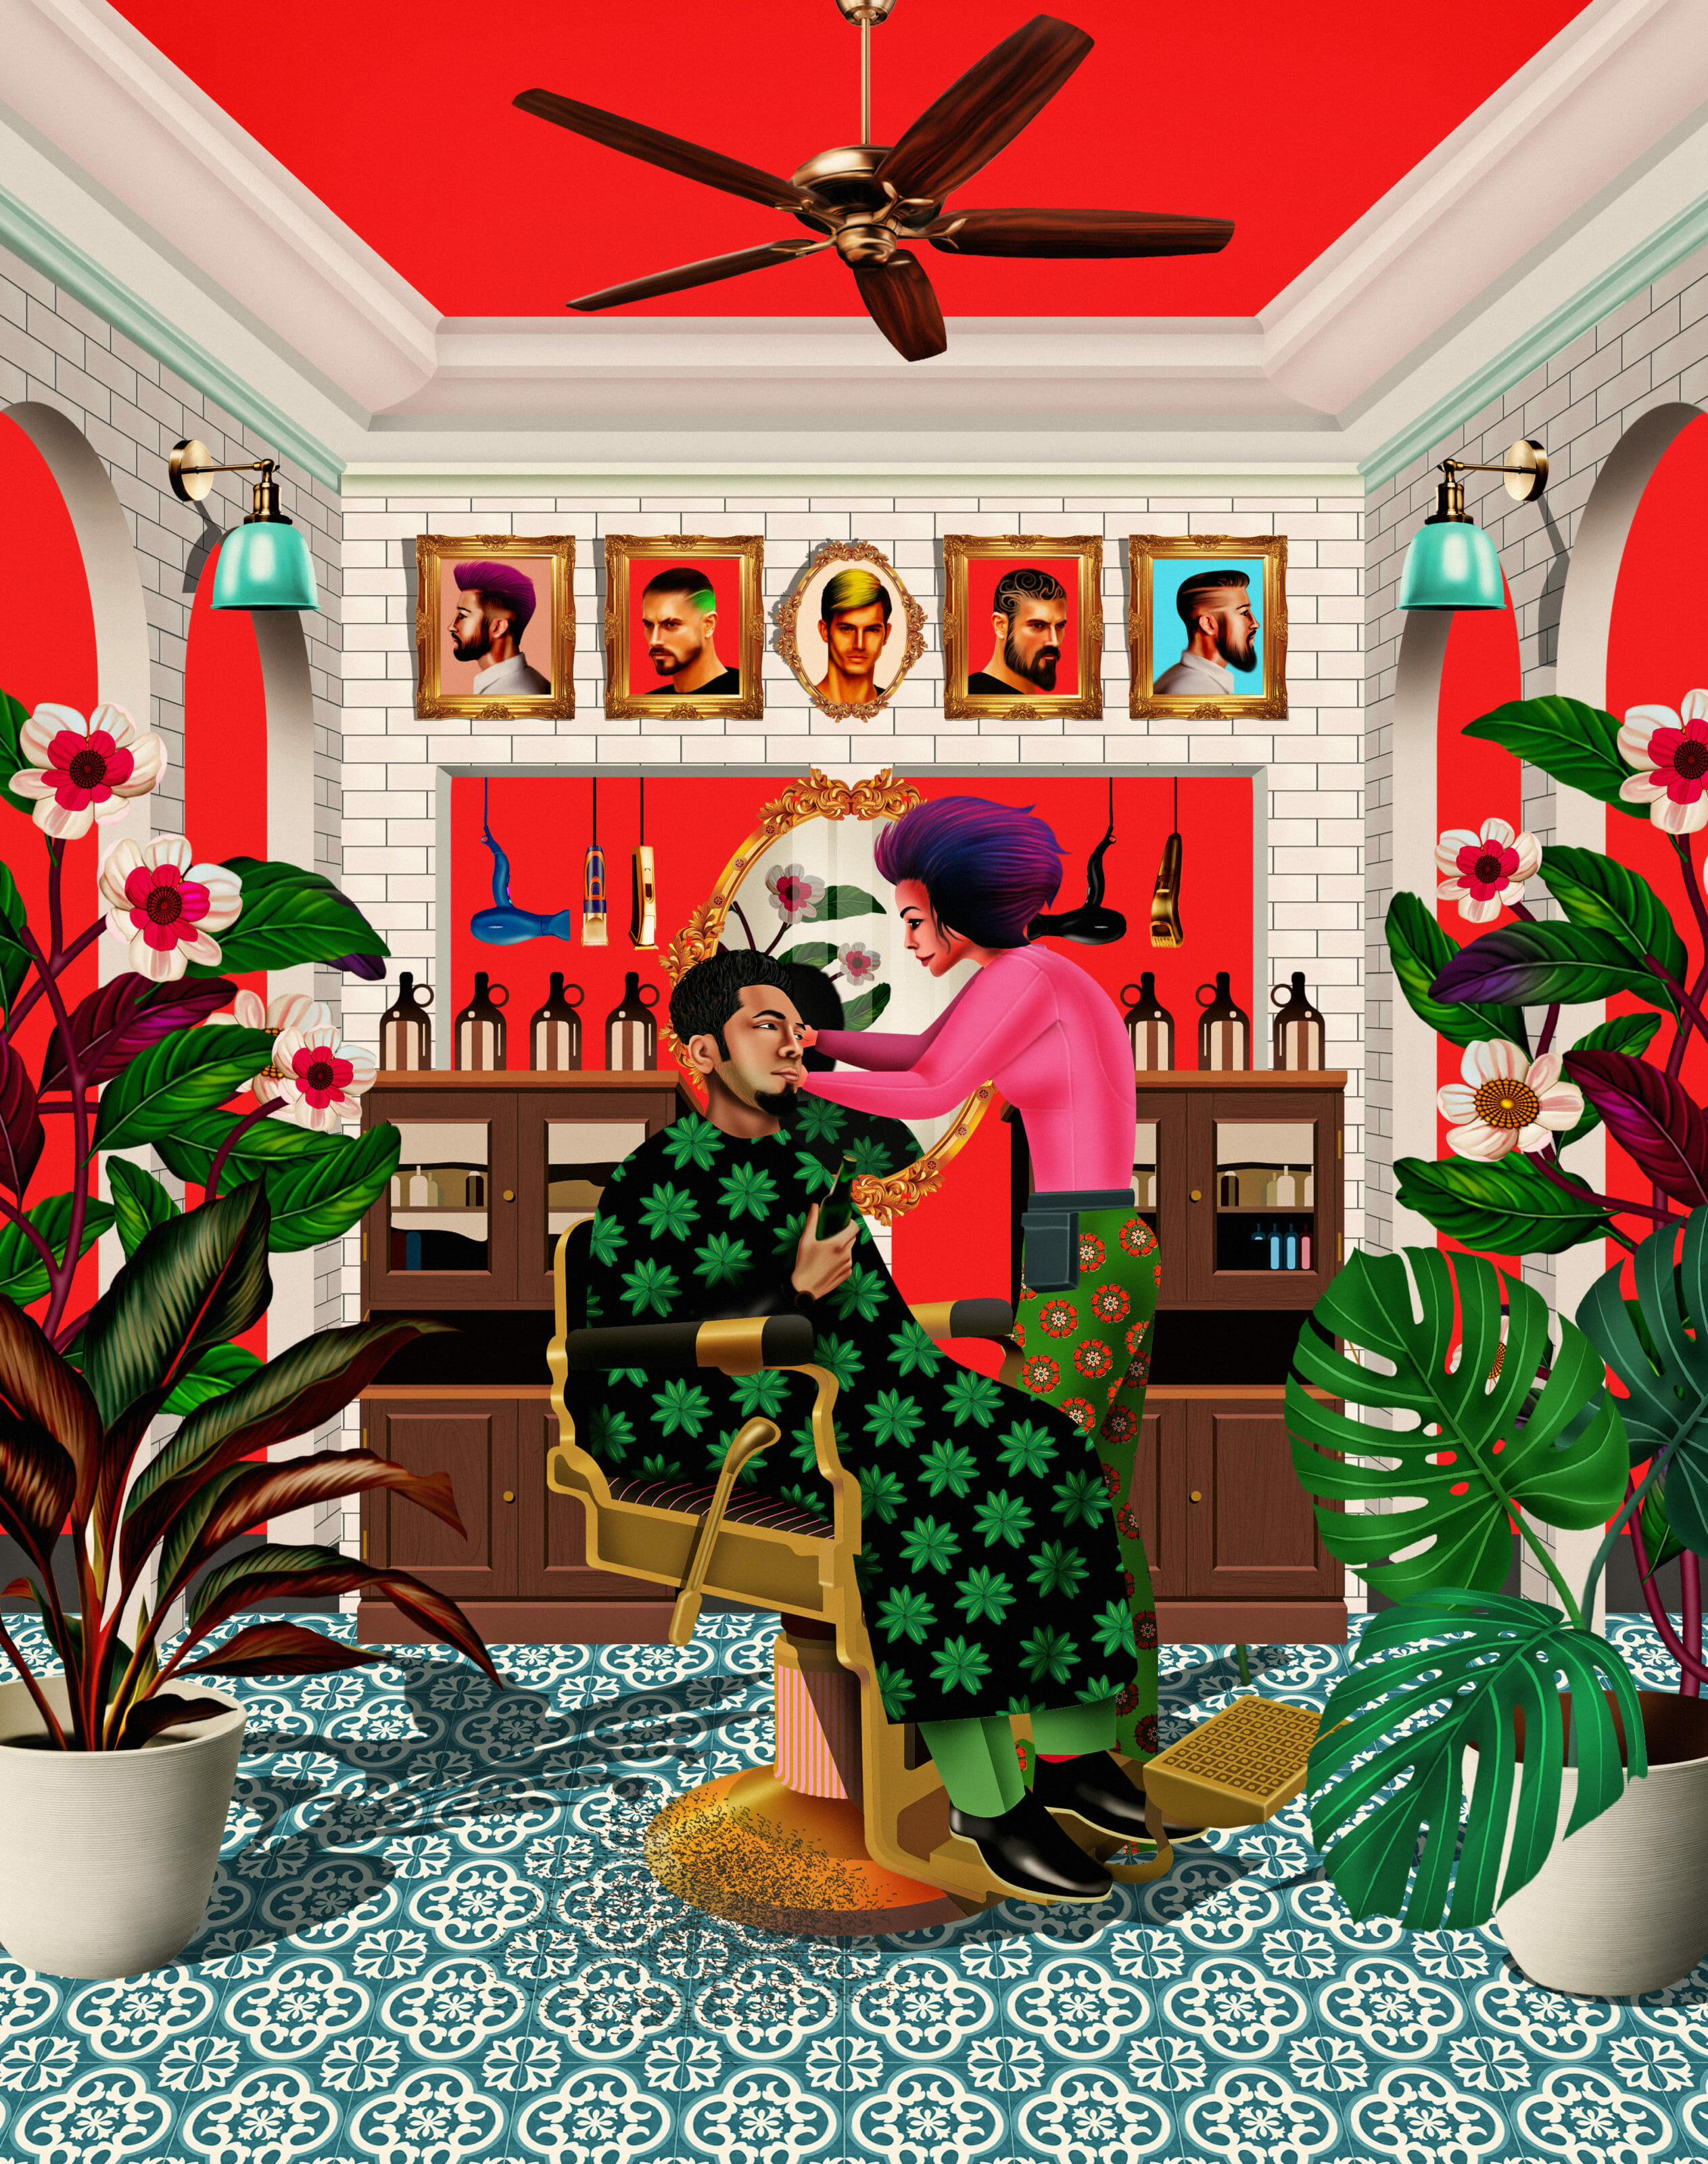 Colorful illustration of a man in a salon titled “Belong Salon” by Reshidev RK.